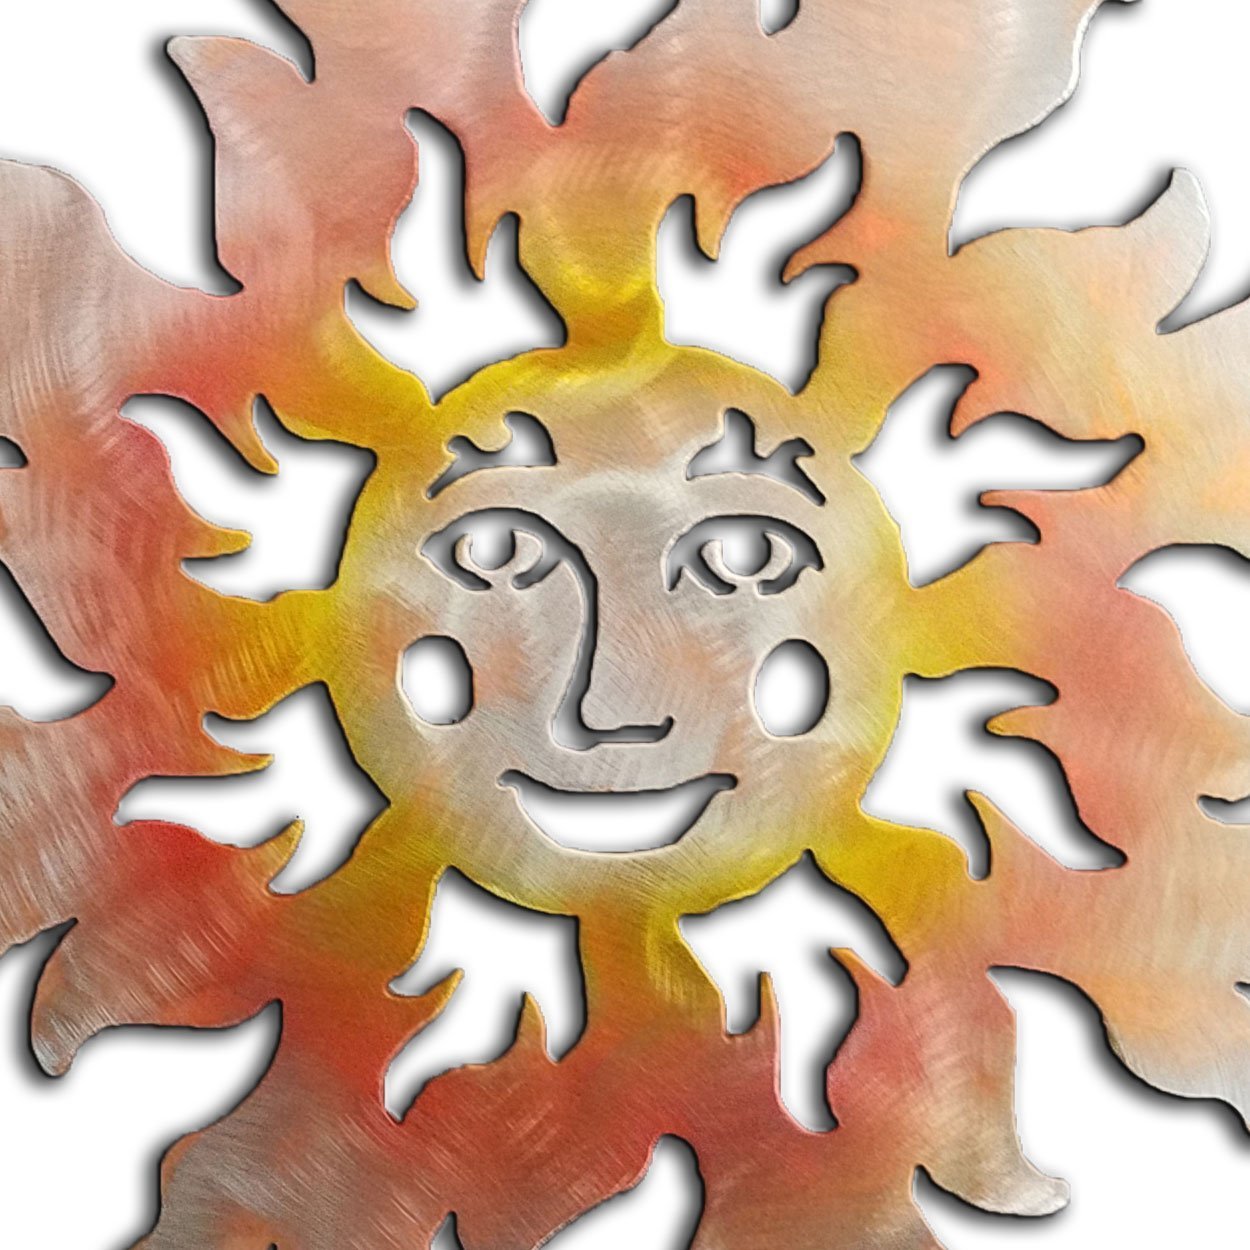 165072 - 18-inch medium Smiling Sun Face 3D Metal Wall Art in a vibrant sunset swirl finish